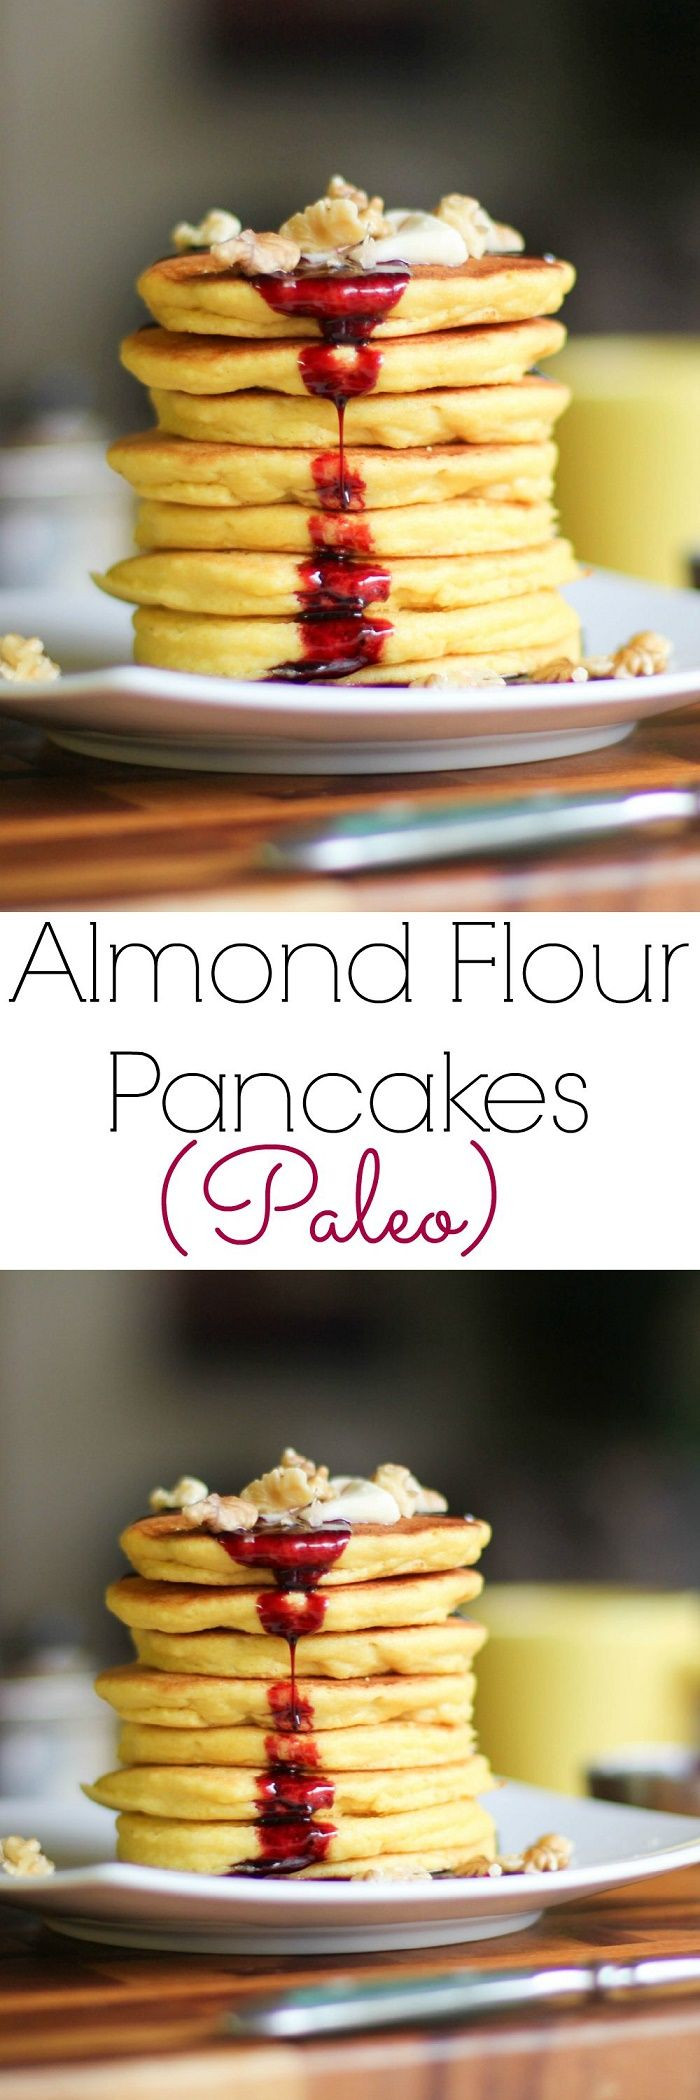 Almond Flour Pancakes Vegan
 4076 best Gluten Free images on Pinterest